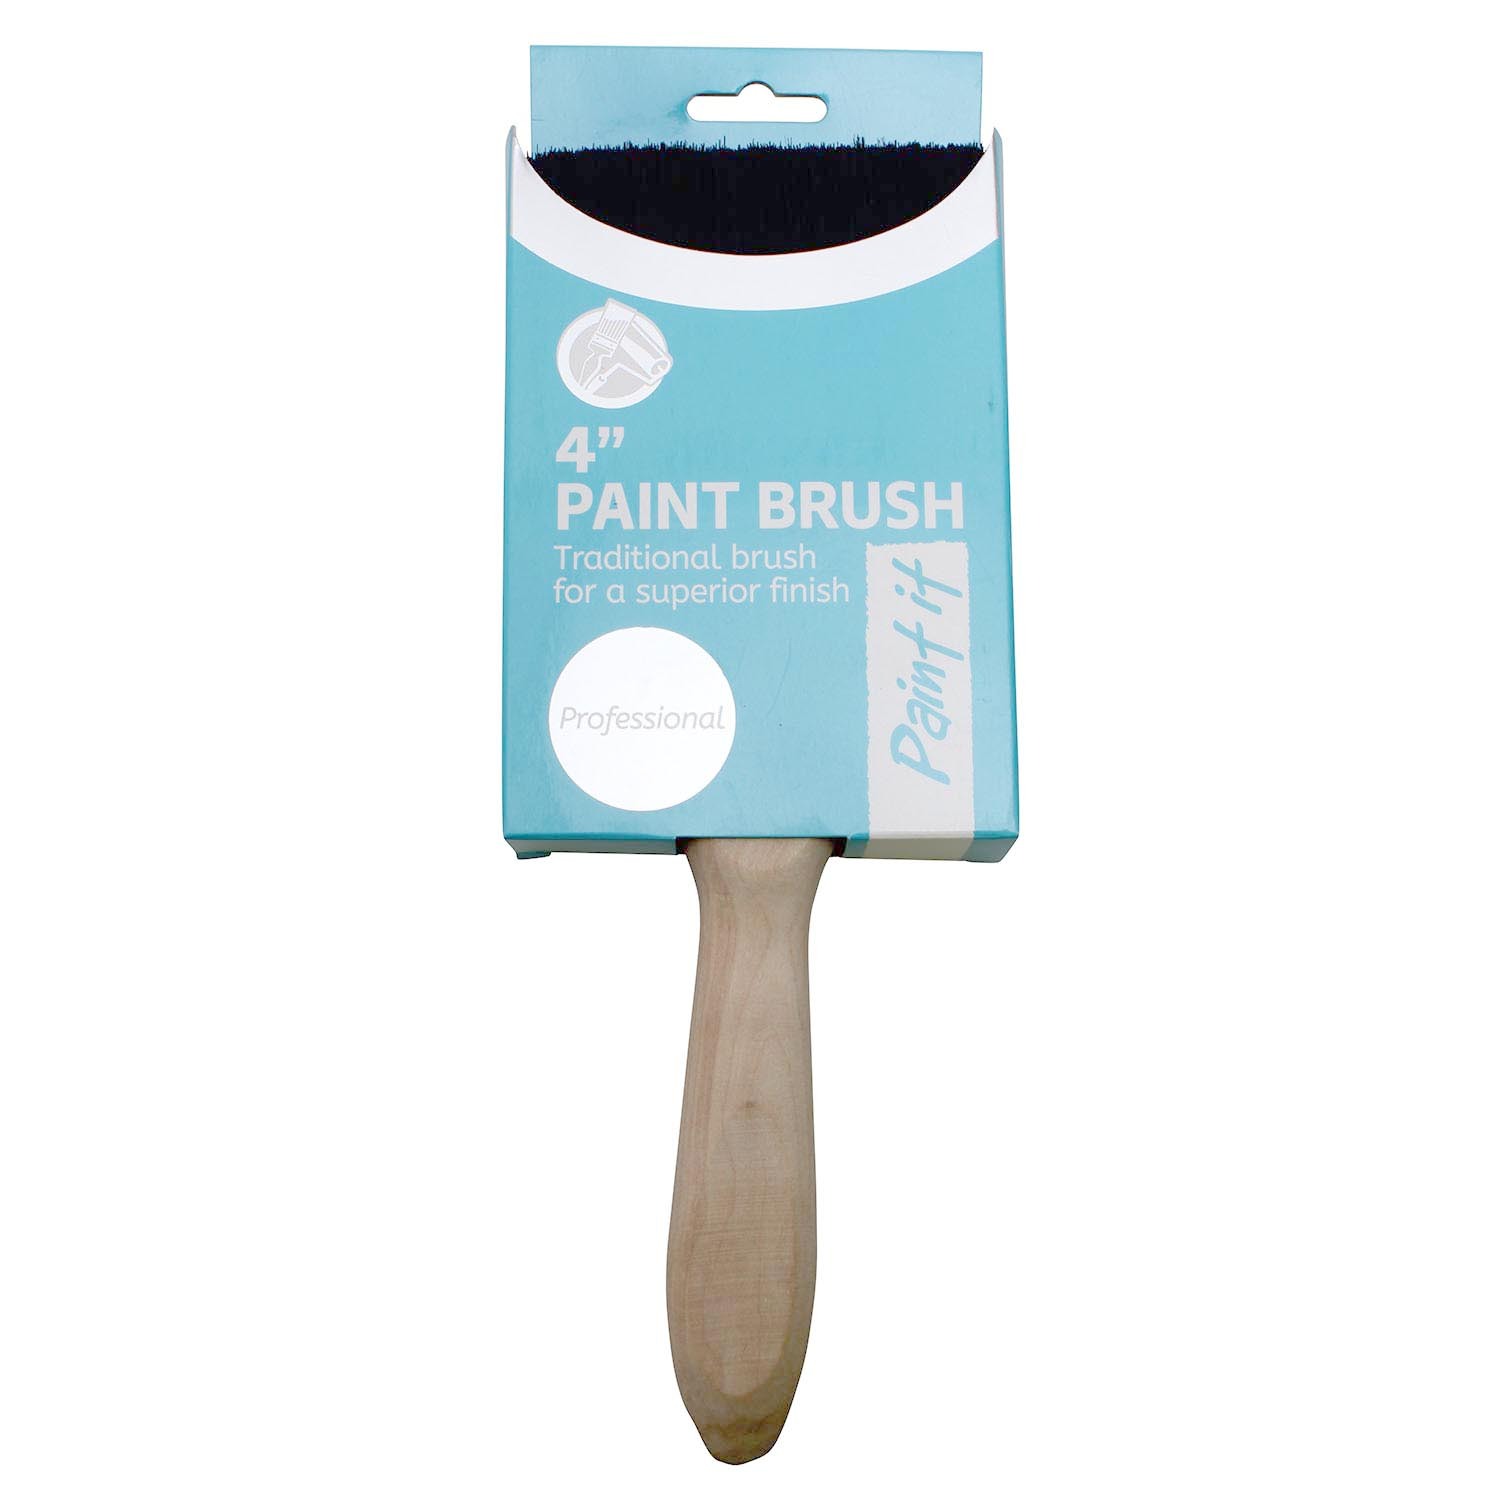 Prepare It 4 inch Professional Paint Brush Image 2